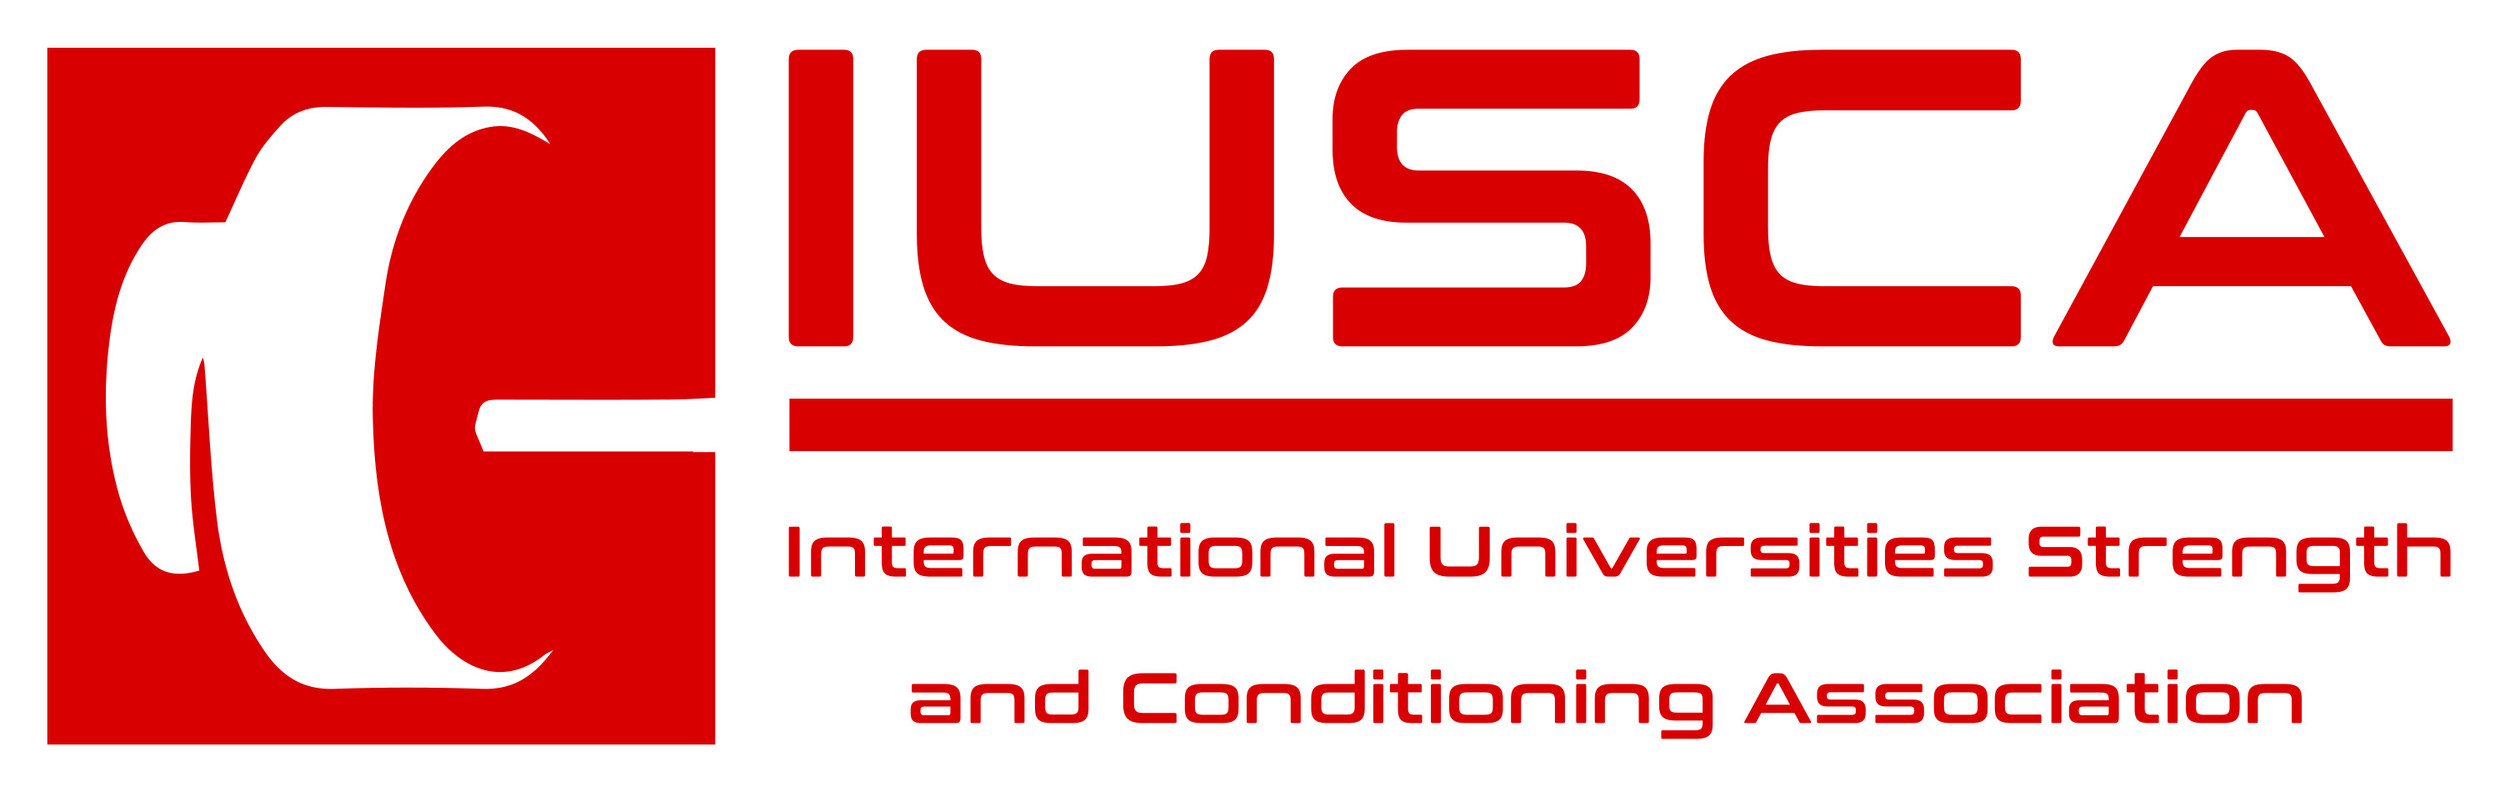 International Universities Strength and Conditioning Association (IUSCA) logo